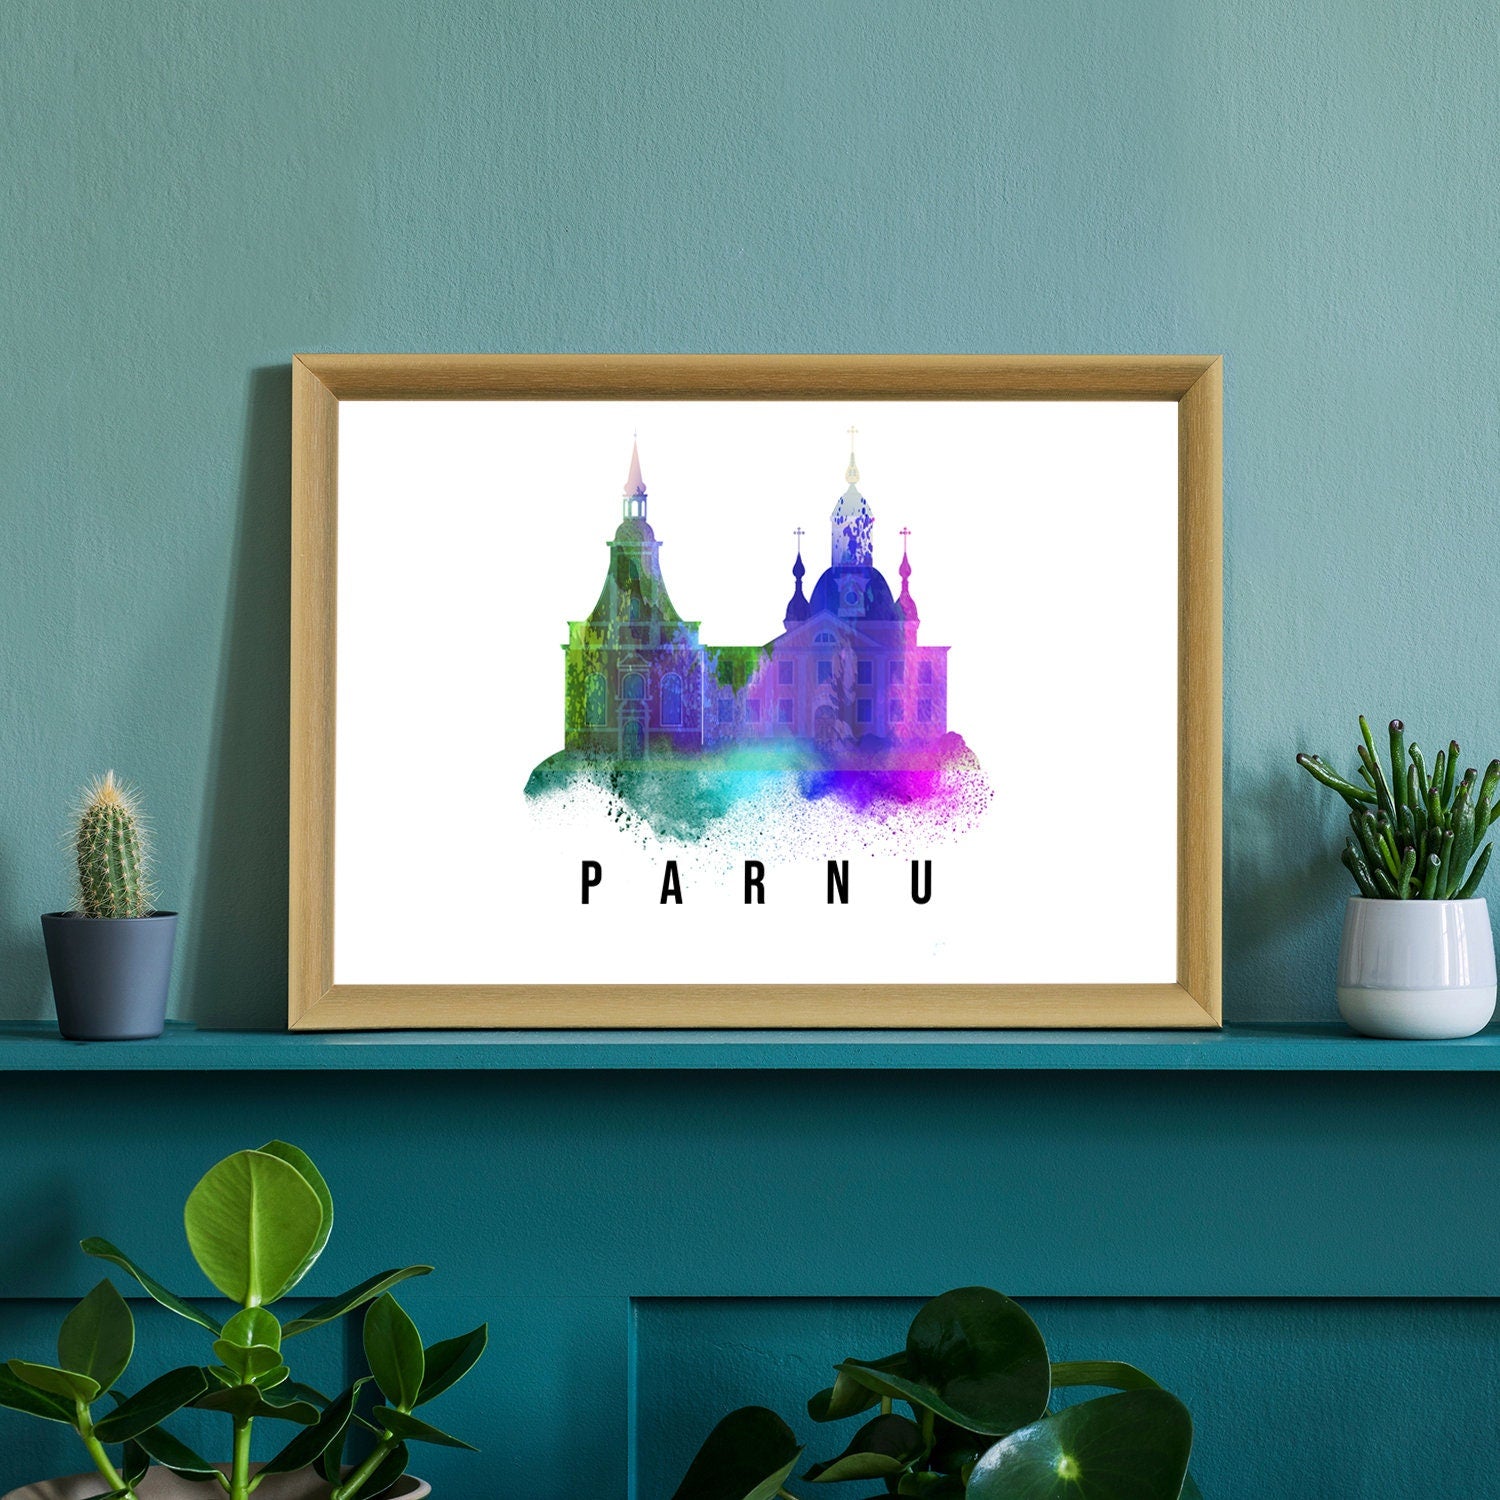 Estonia Parnu Poster, Skyline poster cityscape poster, Landmark City Illustration poster, Home wall decoration, Office wall art